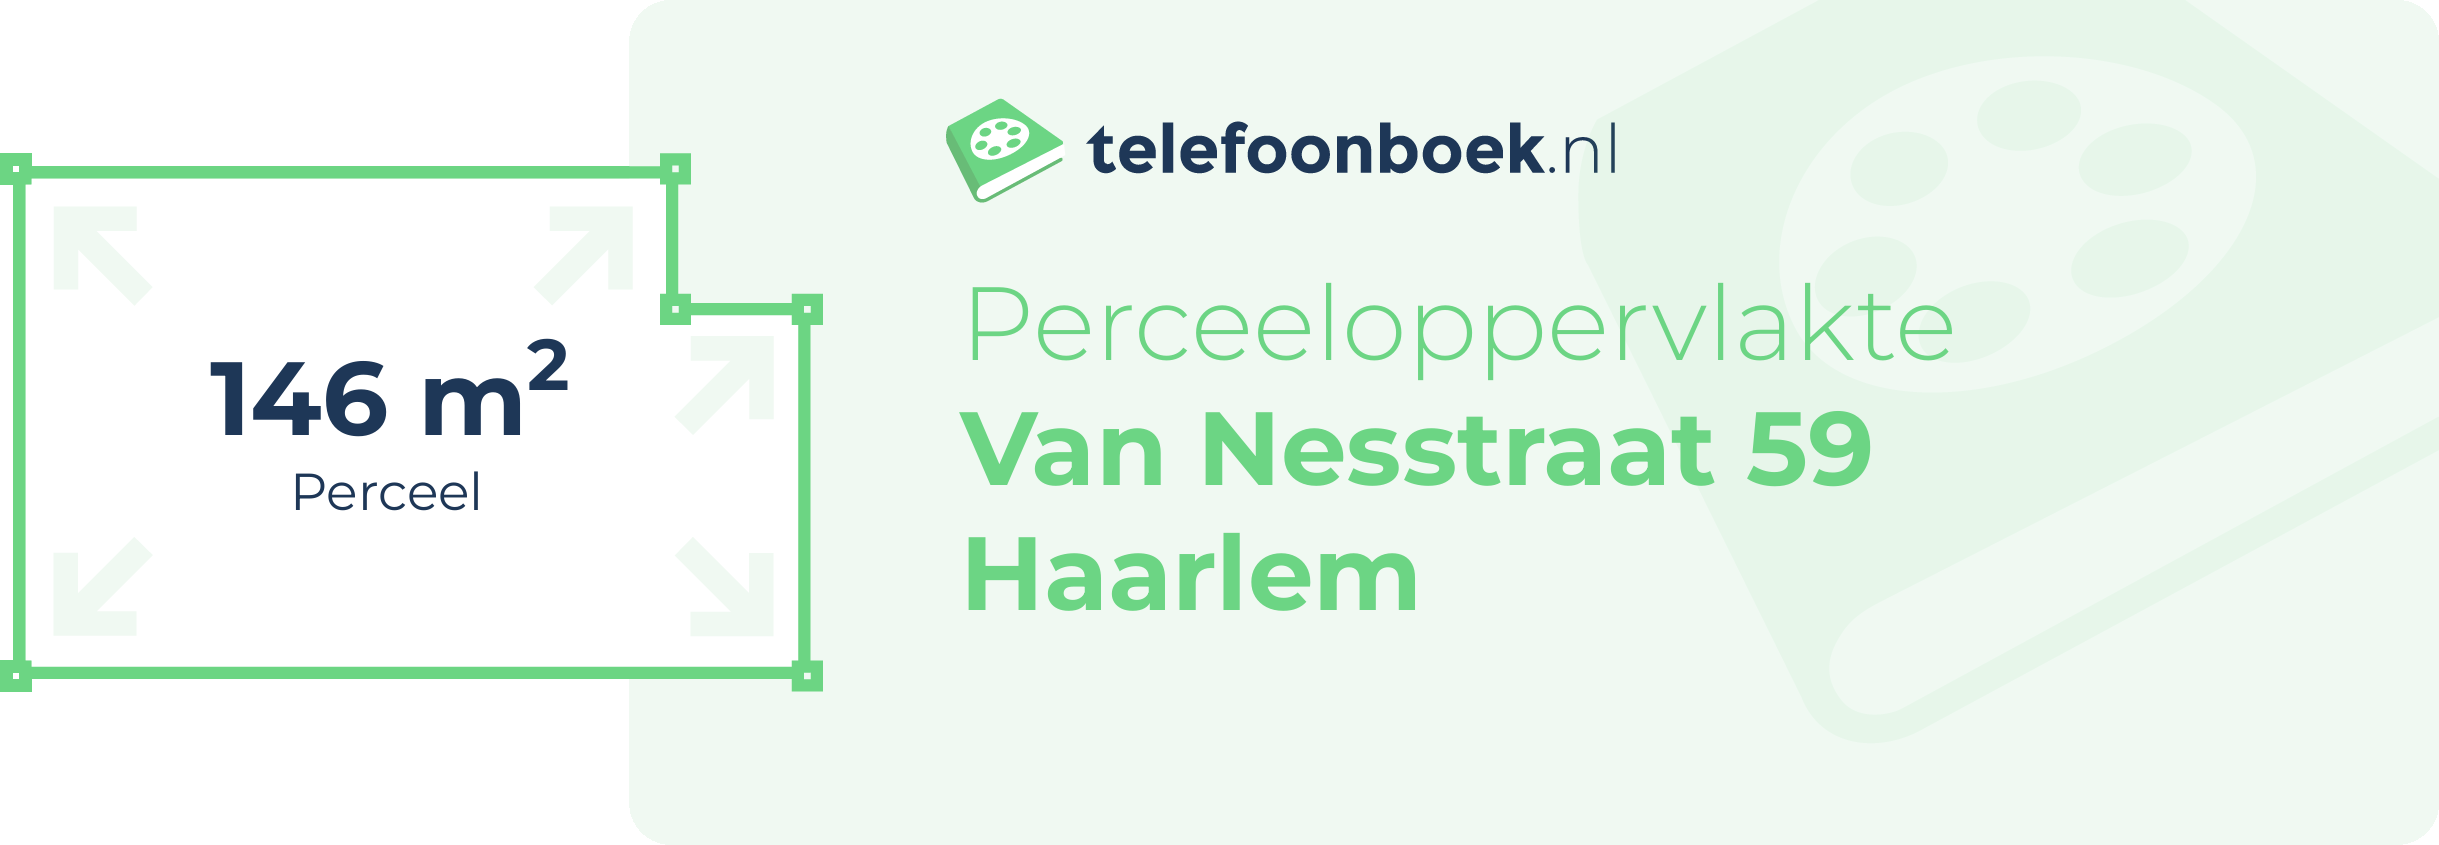 Perceeloppervlakte Van Nesstraat 59 Haarlem